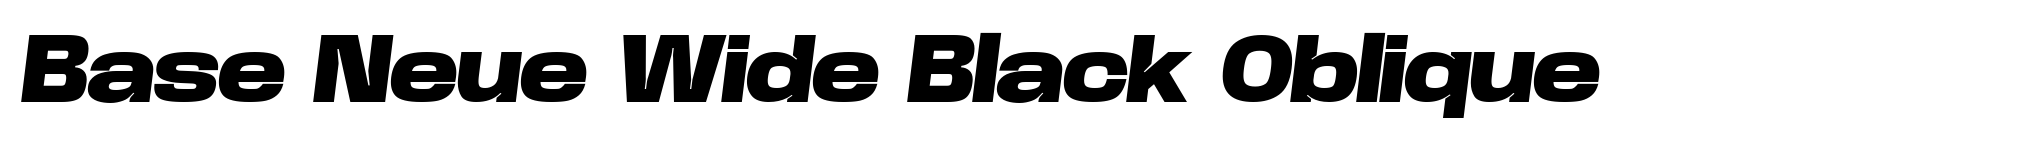 Base Neue Wide Black Oblique image